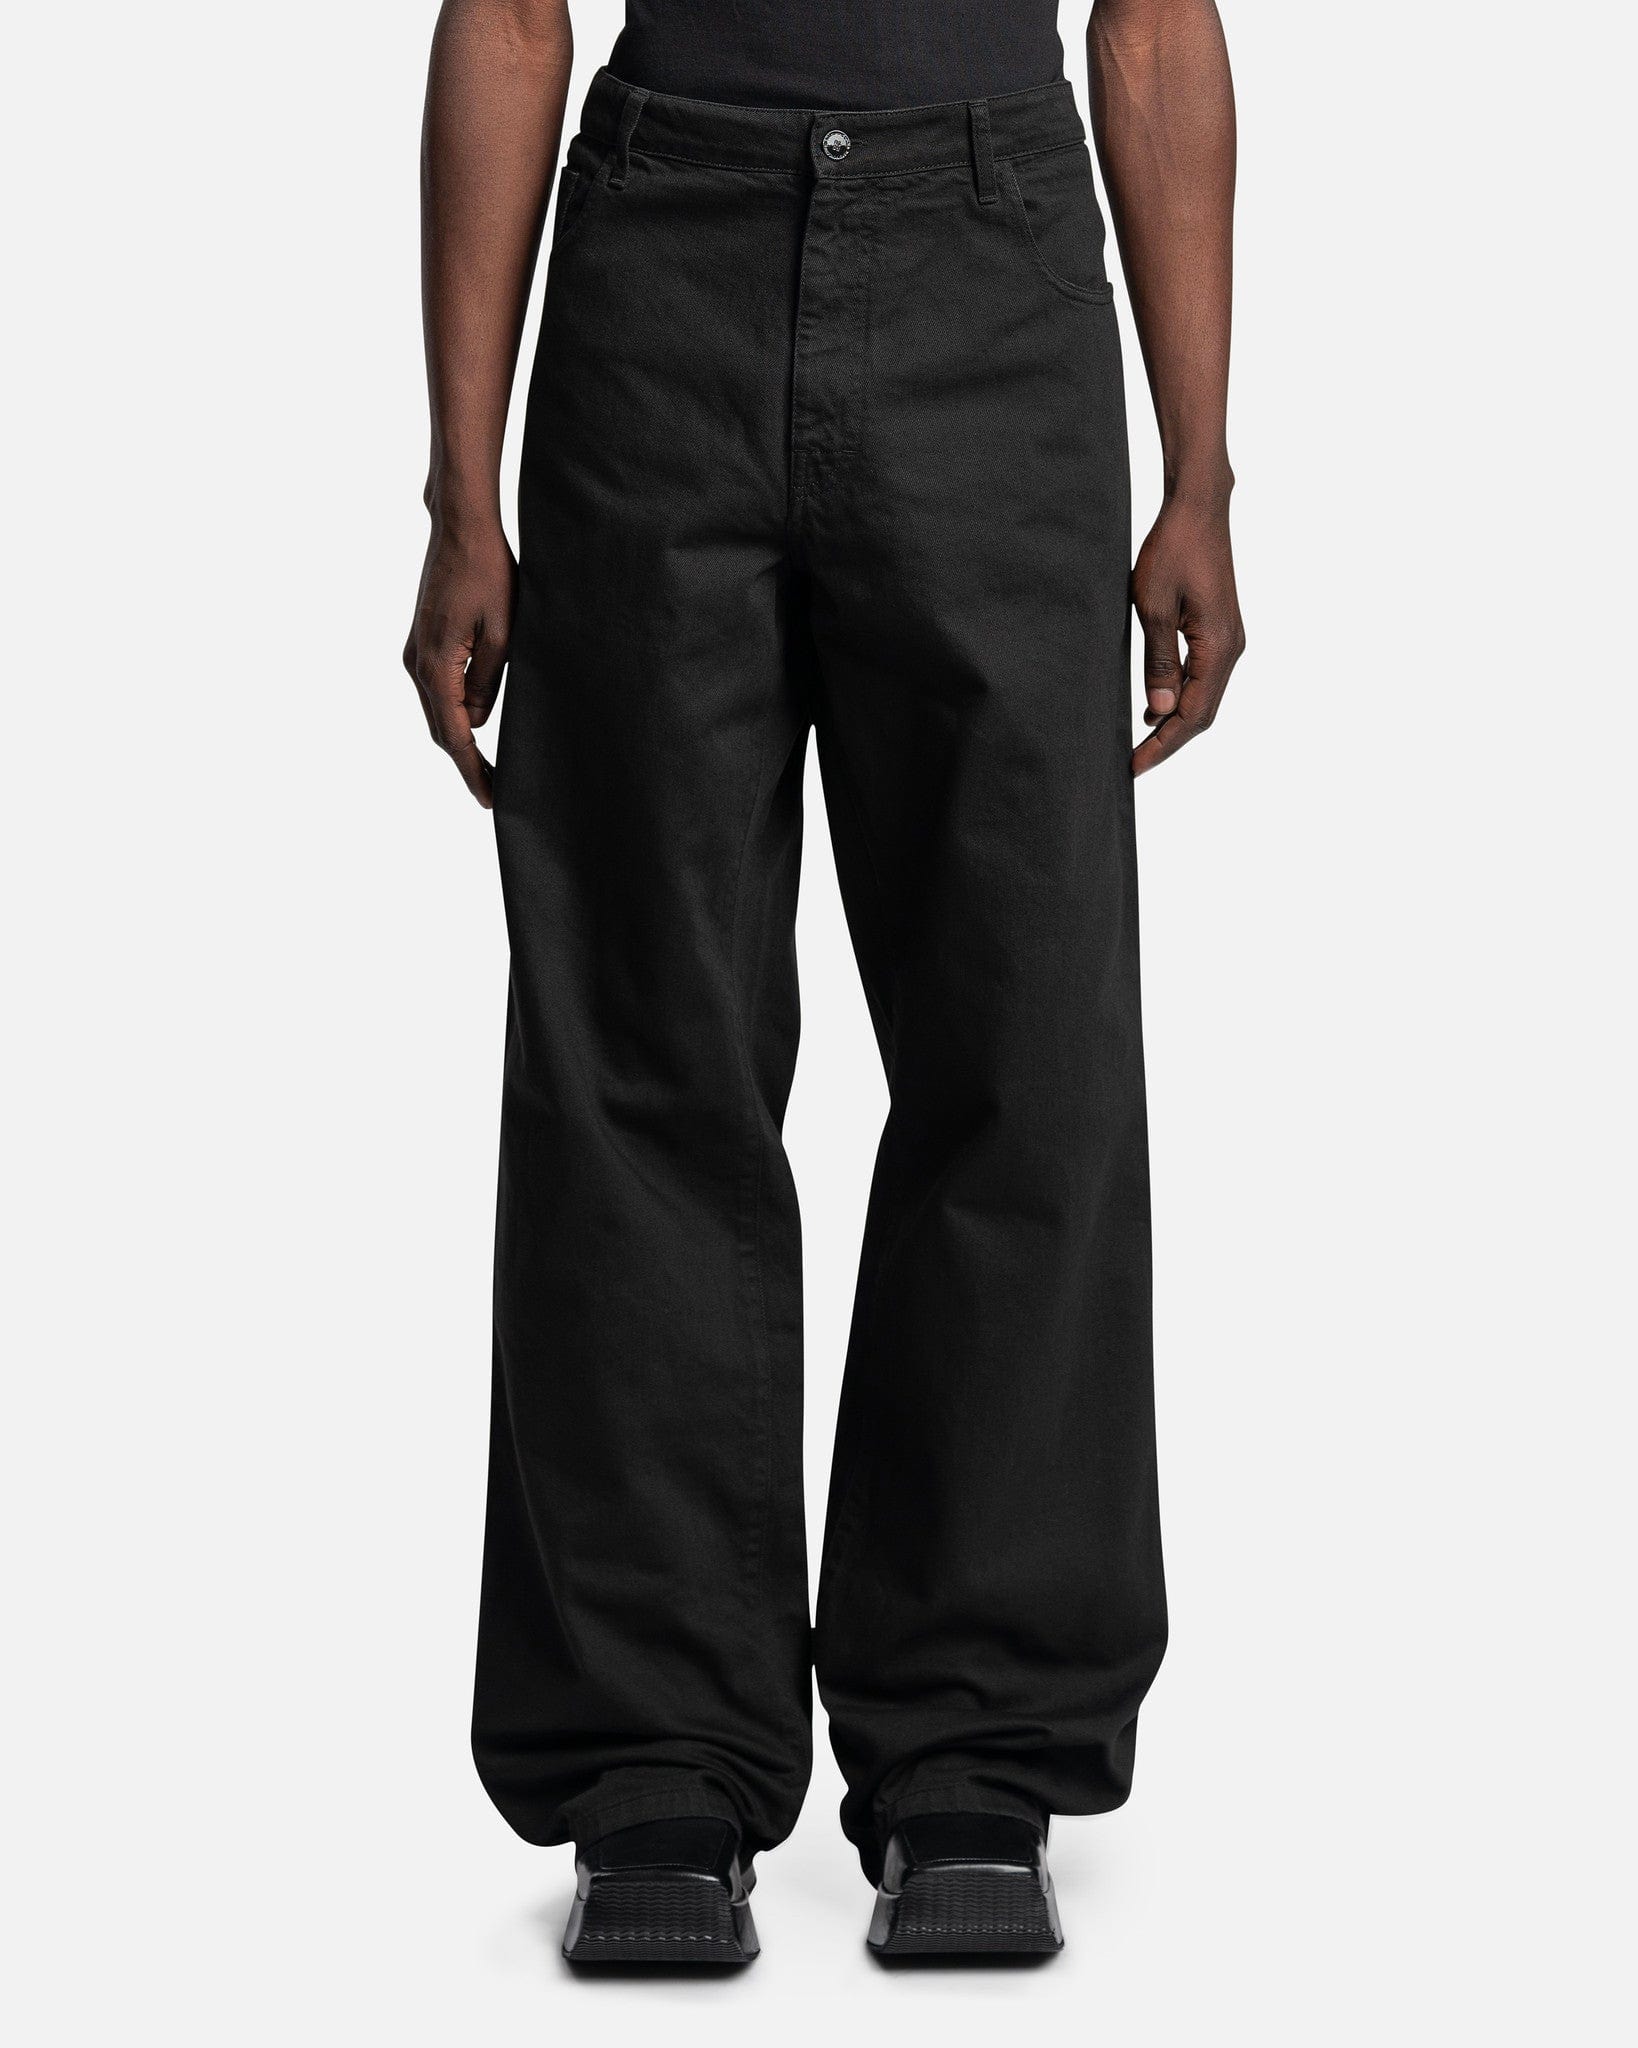 Wide Fit Denim Workwear Pants in Black